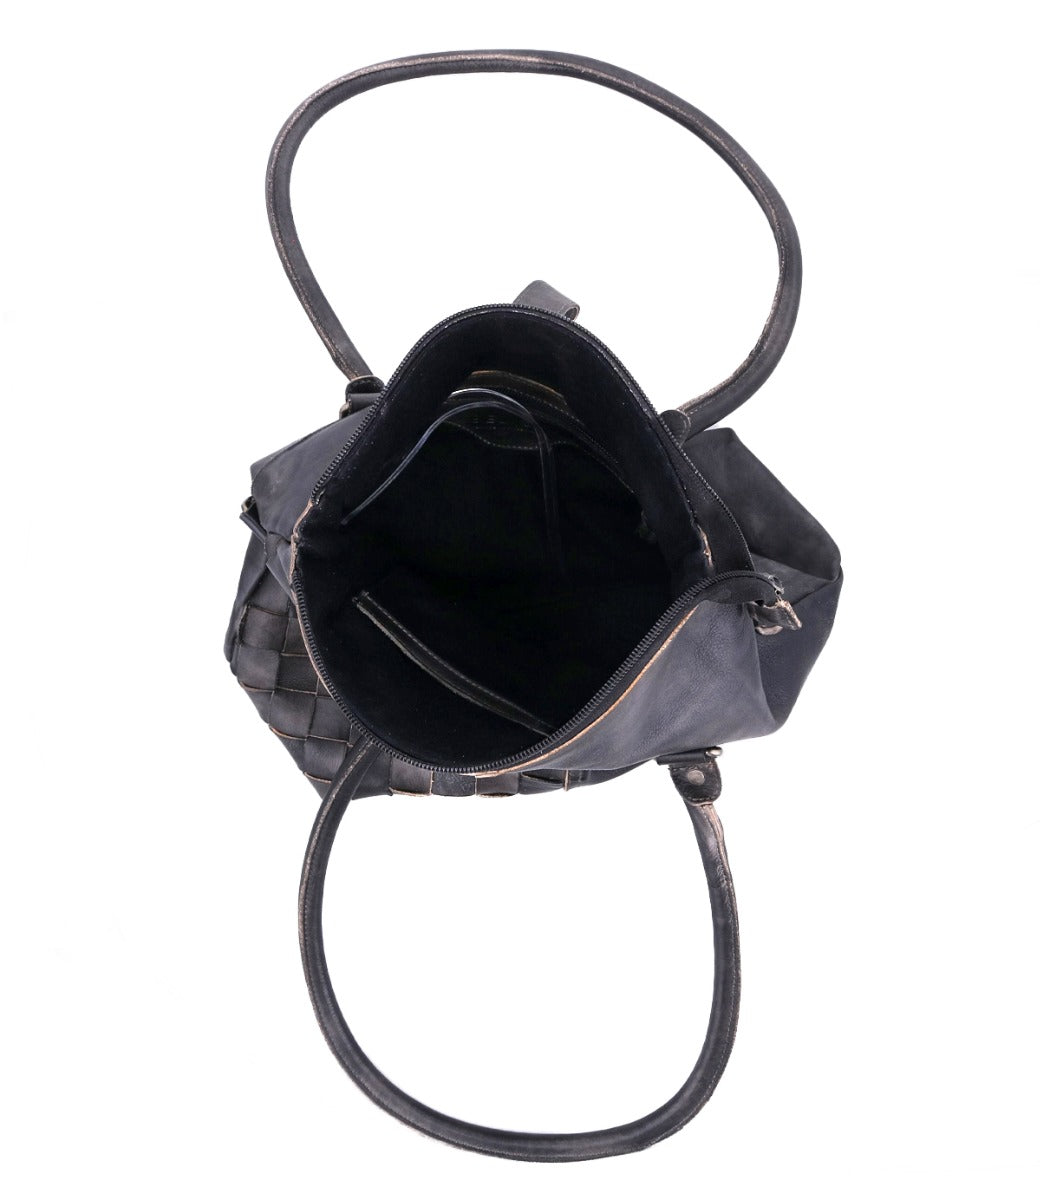 A black Rachel handbag by Bed Stu with a handle and zipper.